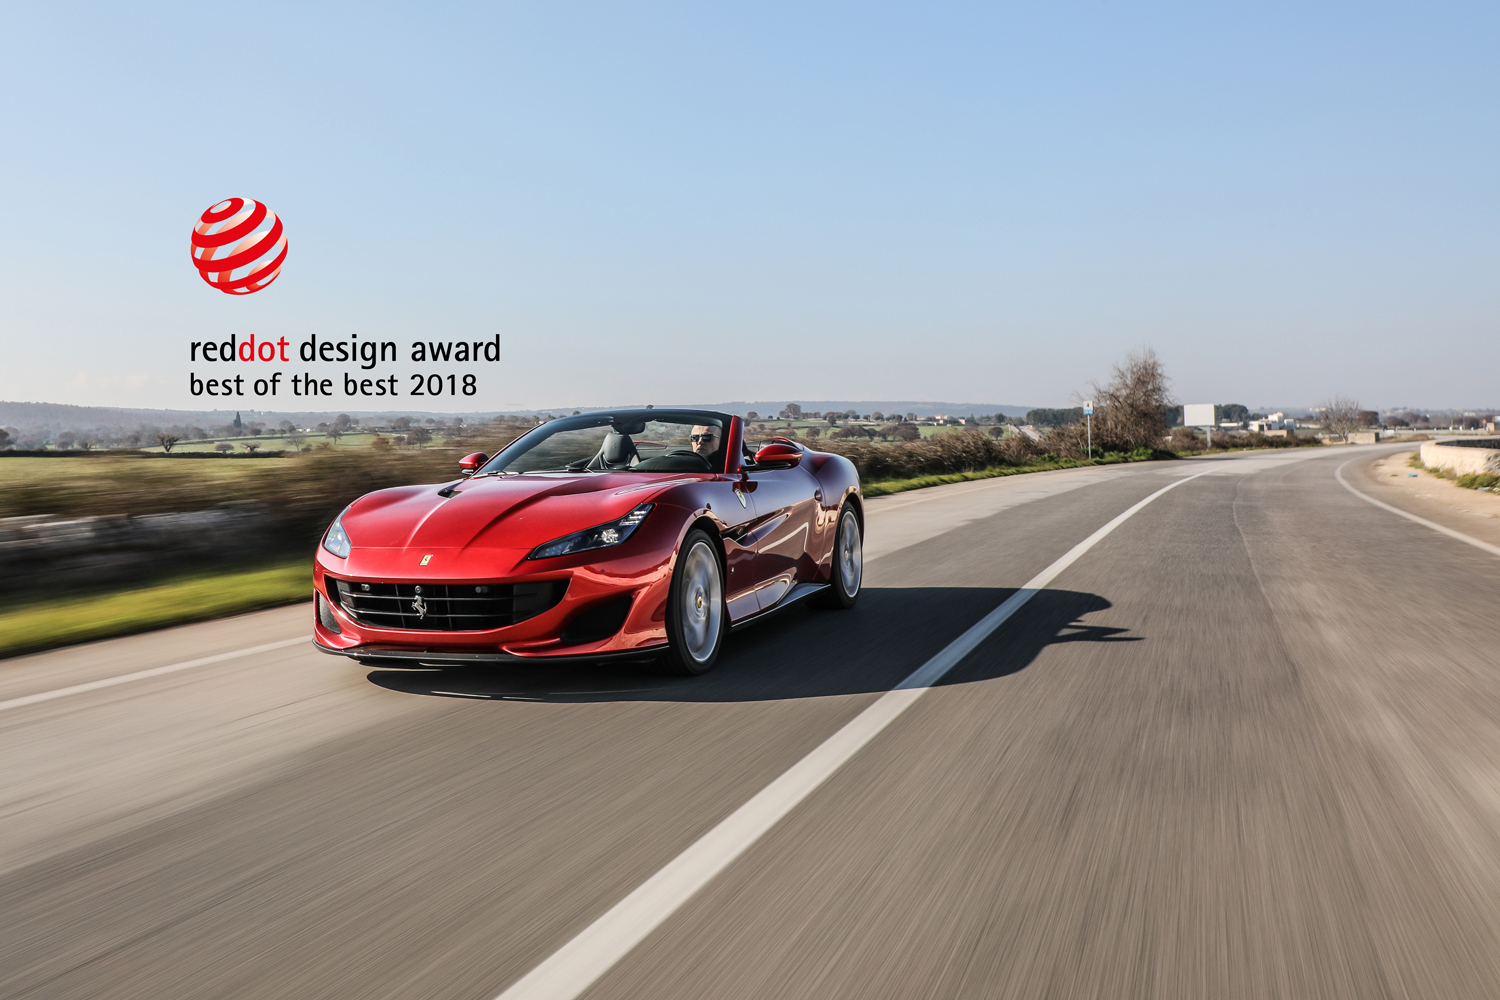 The Ferrari Portofino is recognized for its ground-breaking design